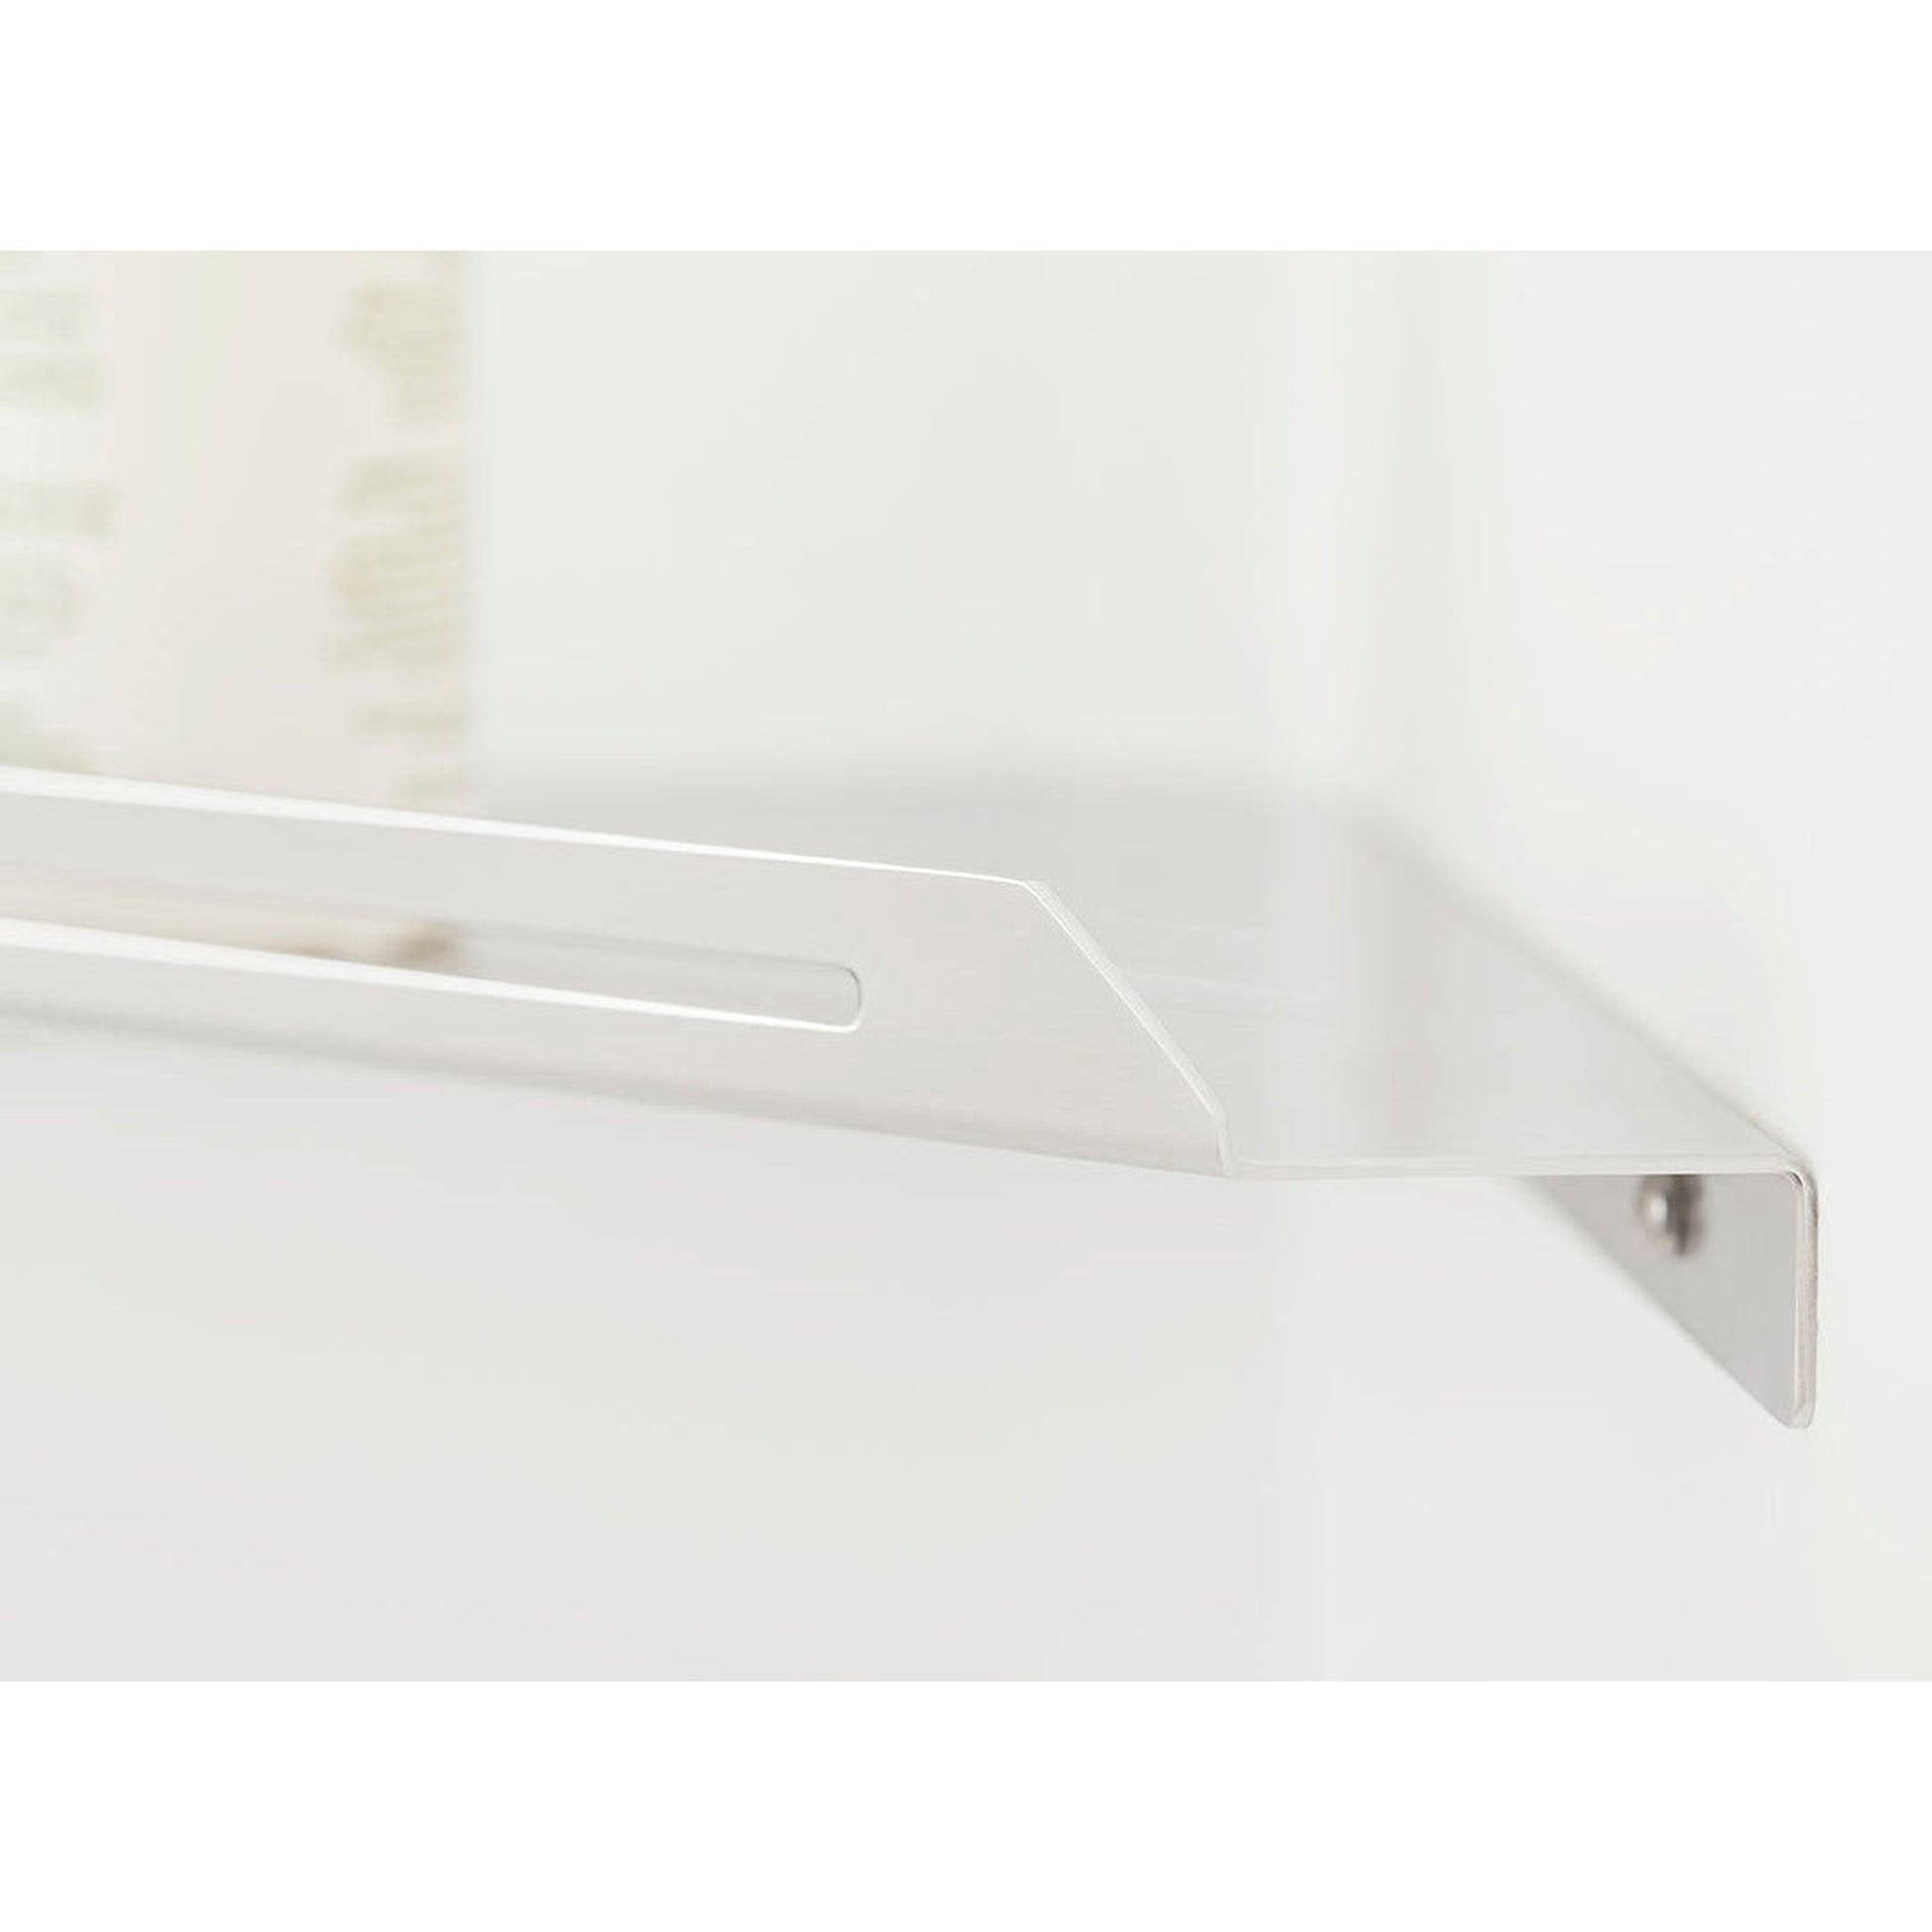 Seachrome Coronado 700 Series 14" x 8" Corner Shower Shelf in Polished Stainless Finish